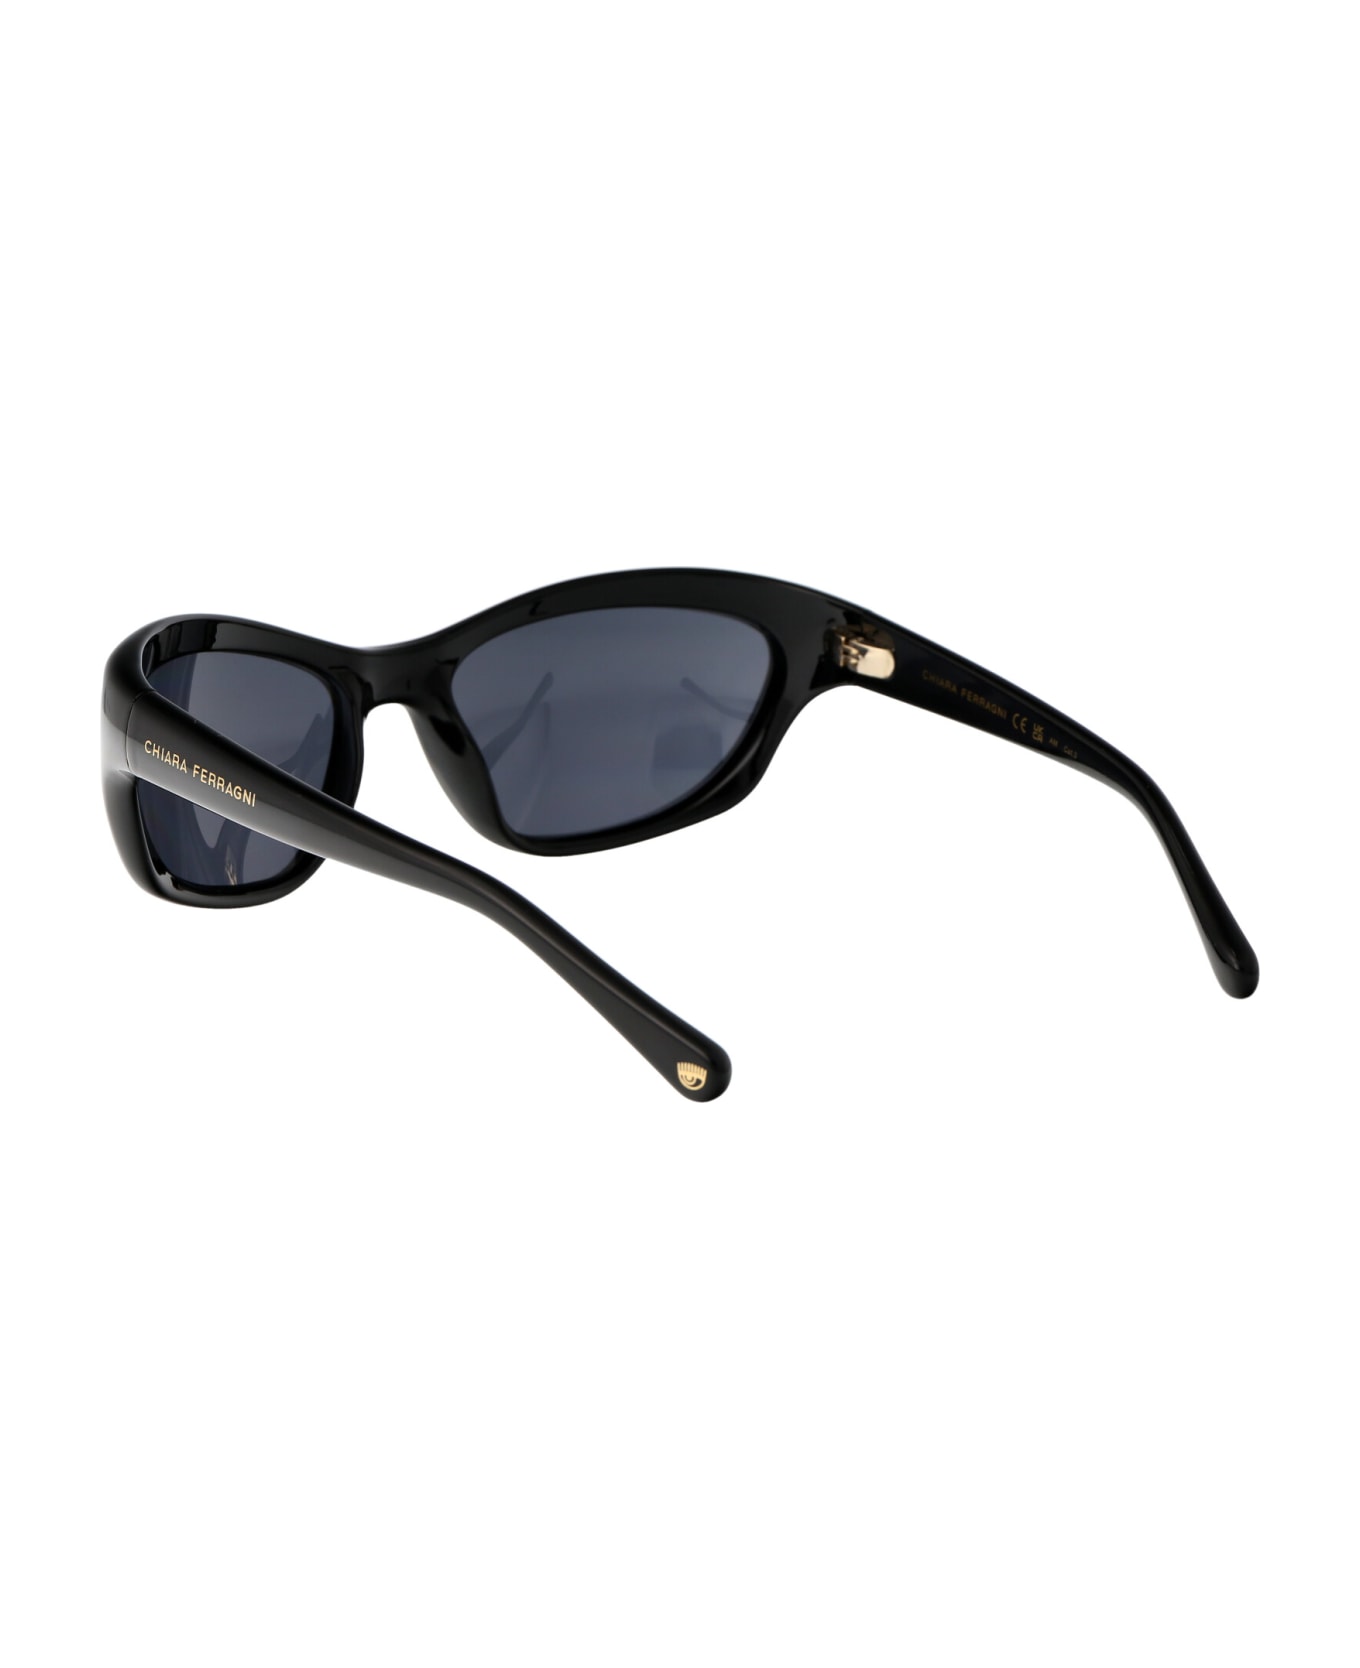 Chiara Ferragni Cf 7030/s Sunglasses - 807IR BLACK